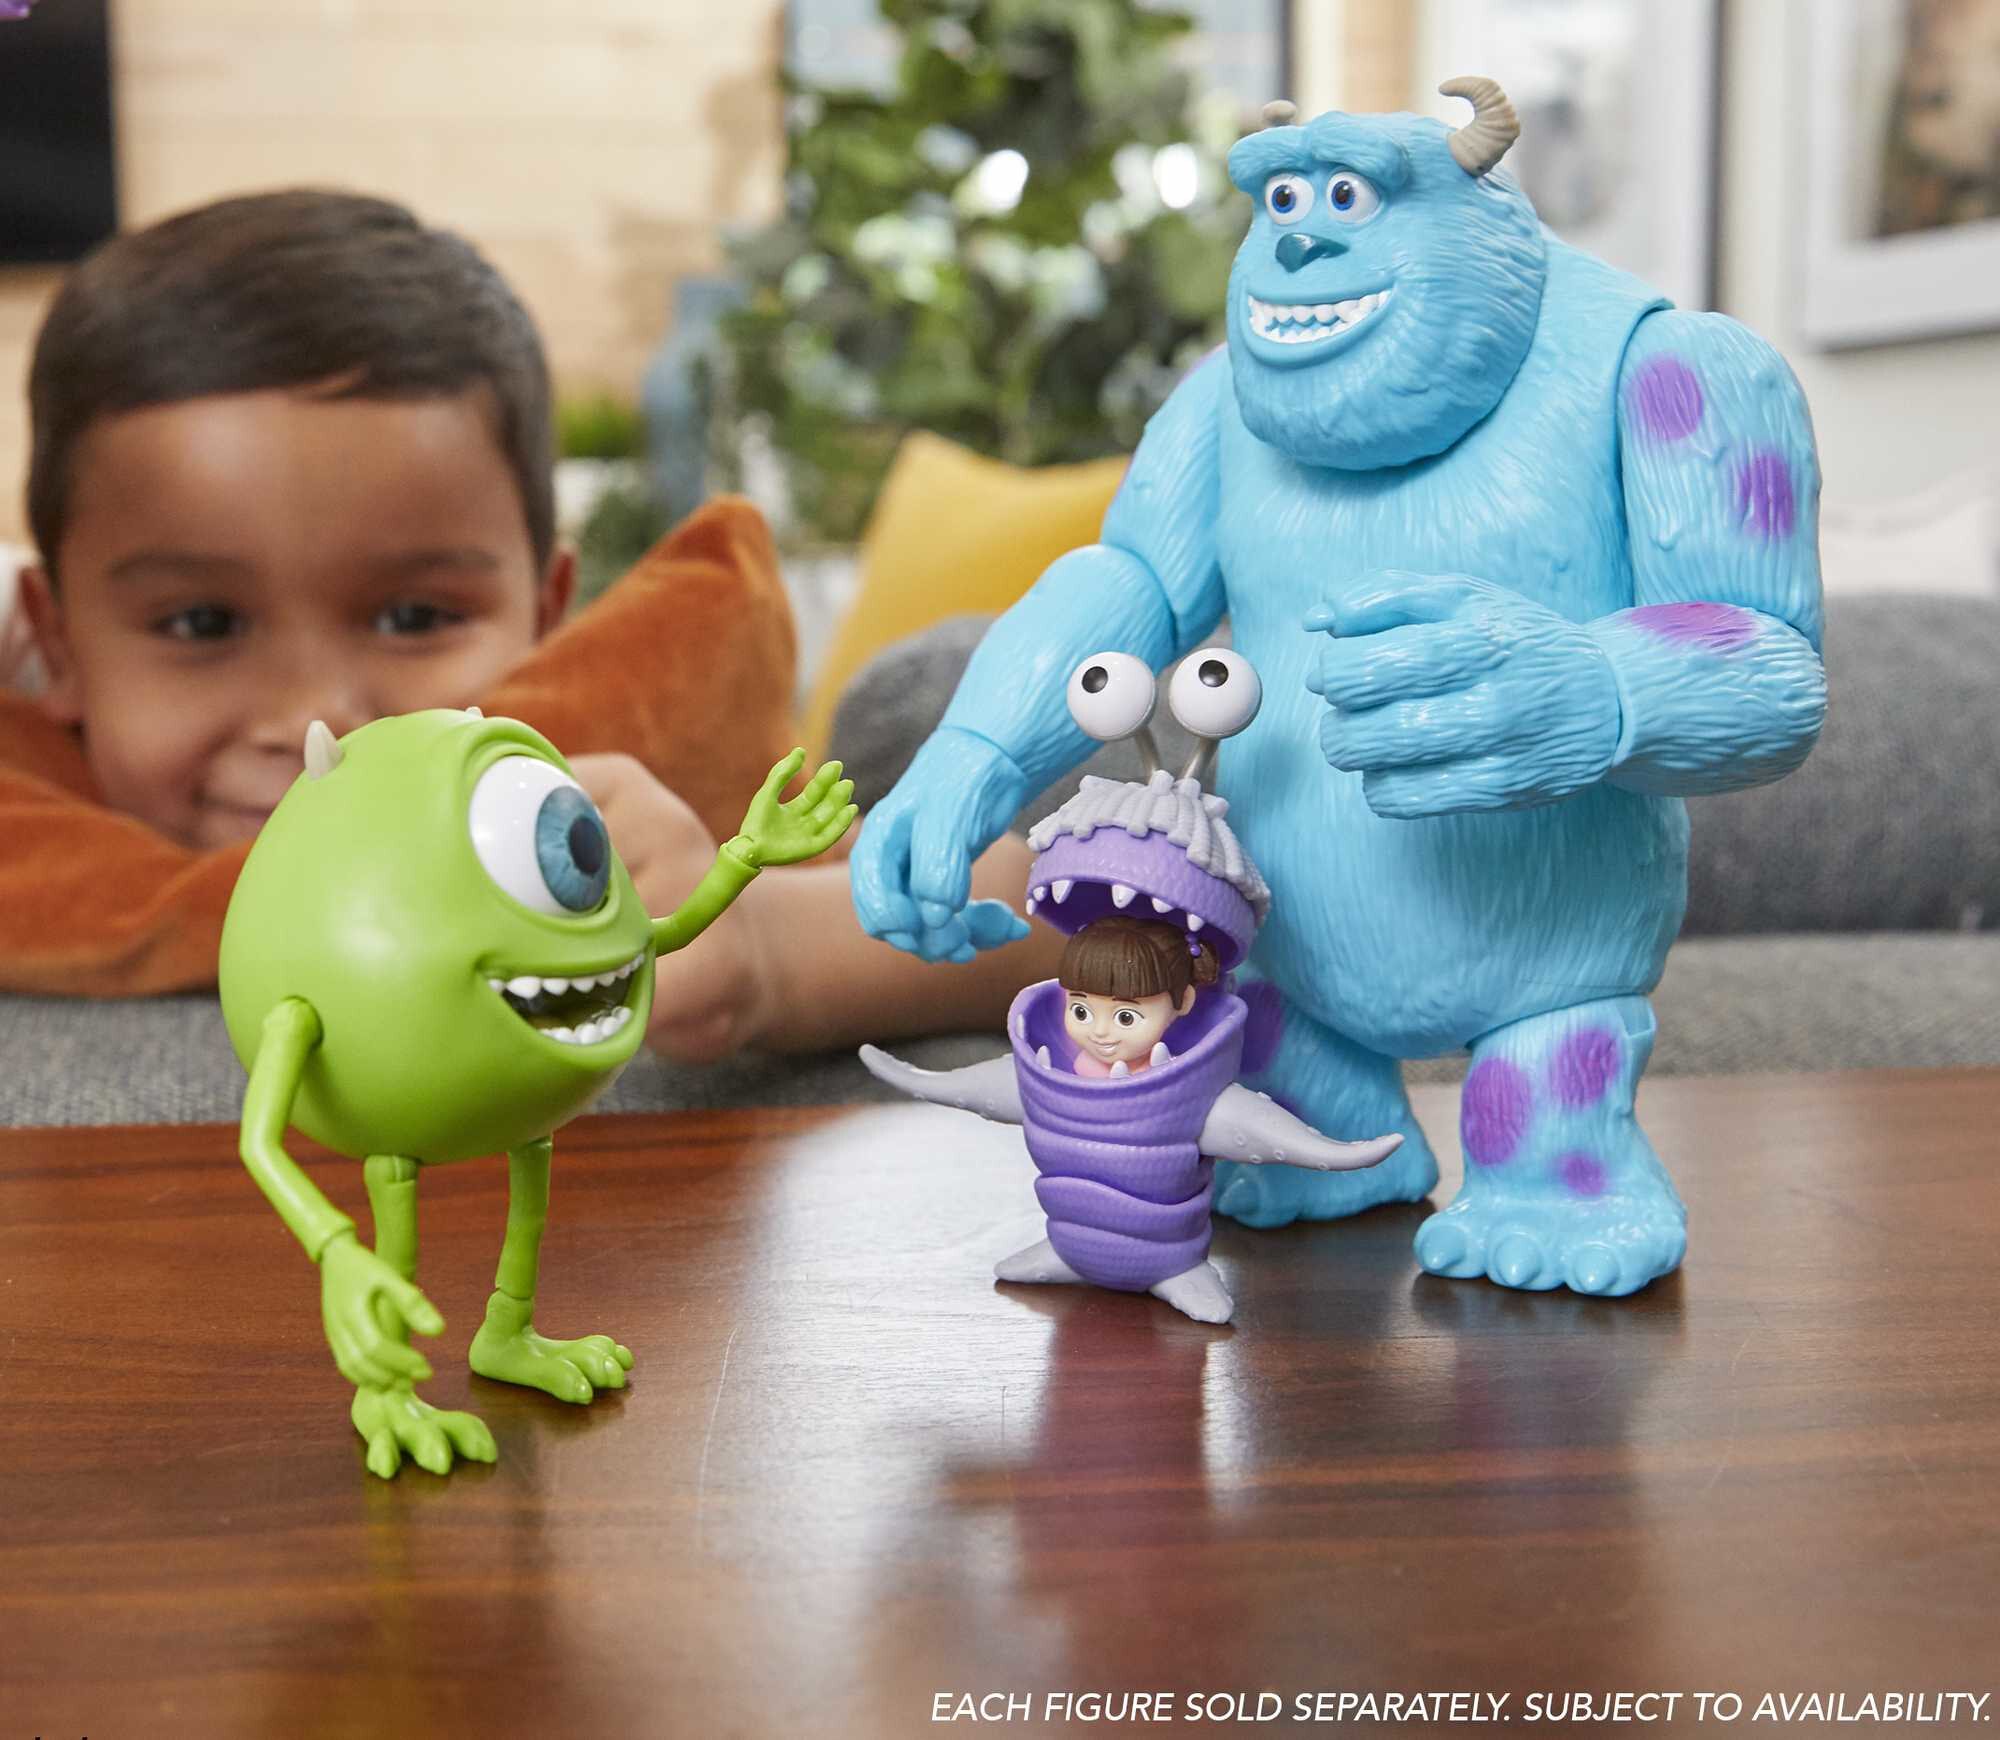 Disney Pixar Monsters Inc Action Figure Sulley James P Sullivan Character - image 3 of 7